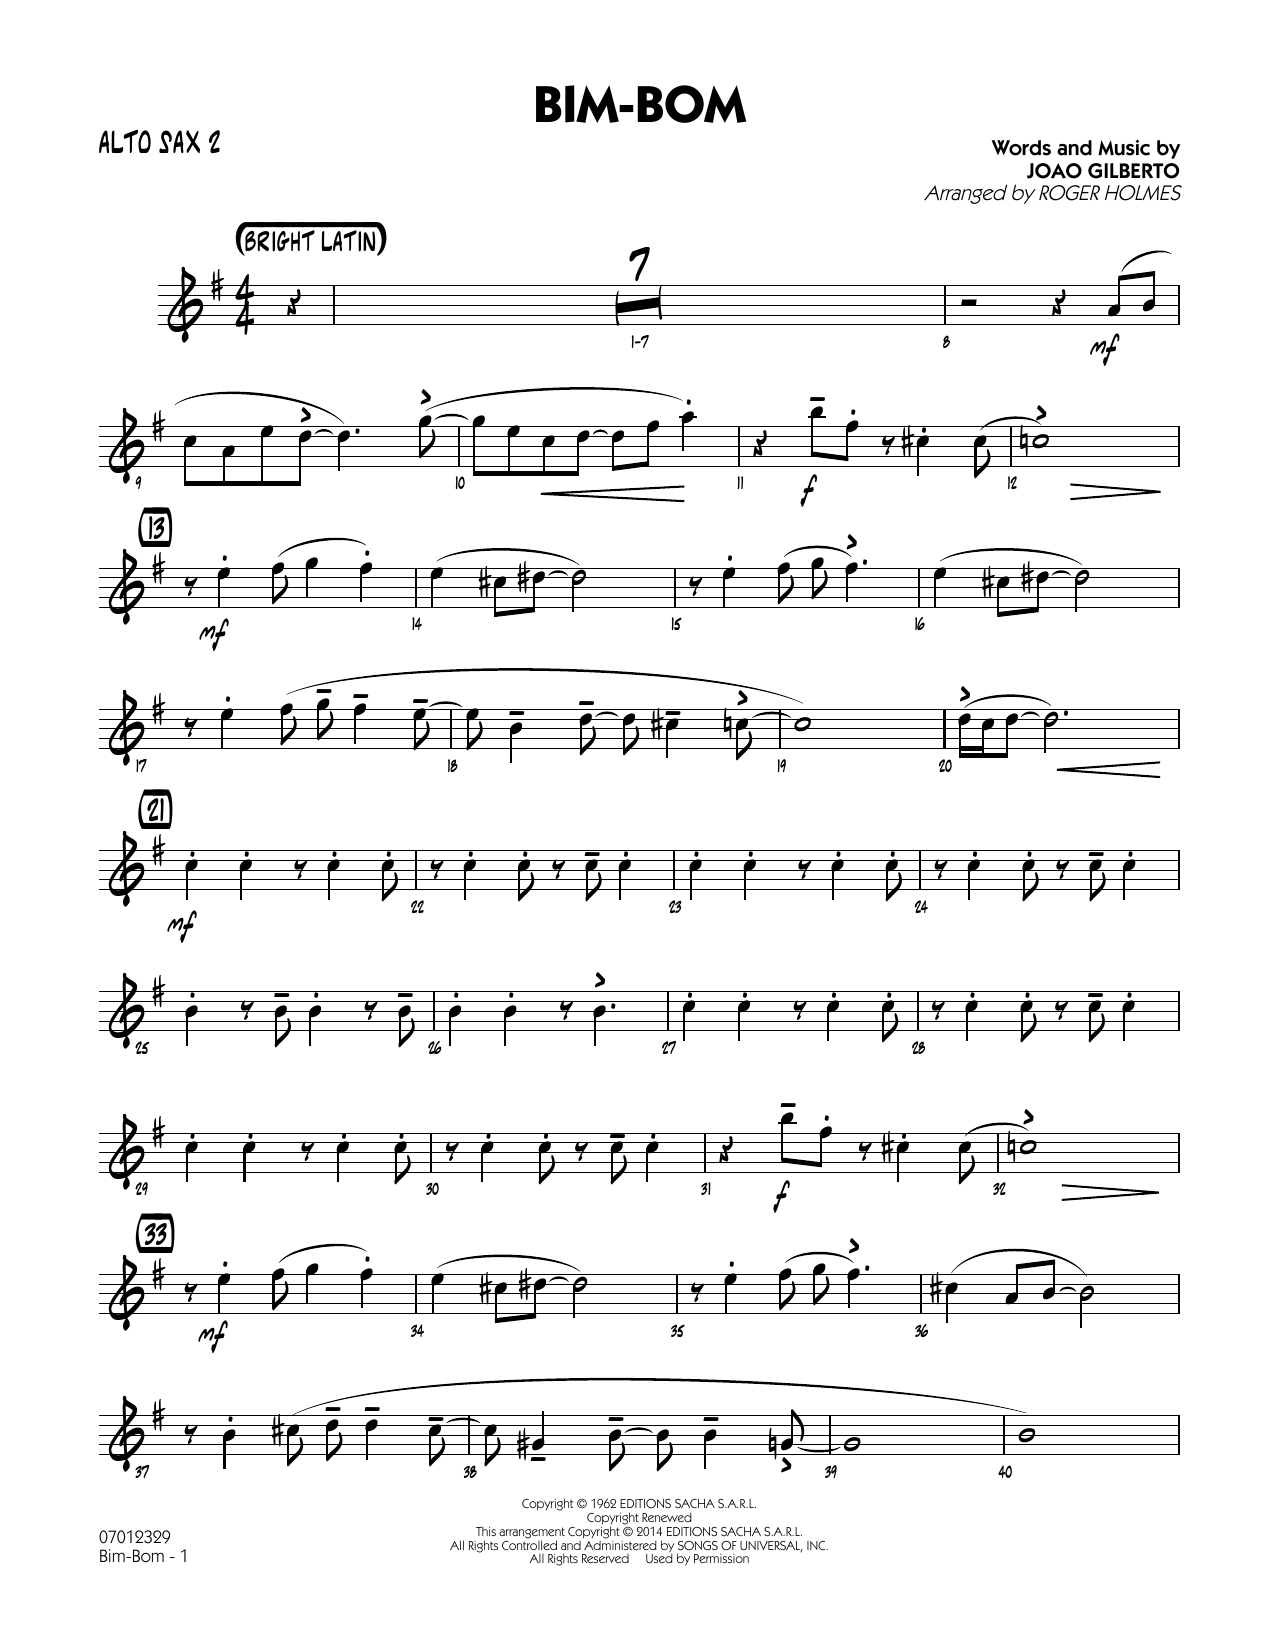 Roger Holmes Bim-Bom - Alto Sax 2 sheet music notes and chords. Download Printable PDF.